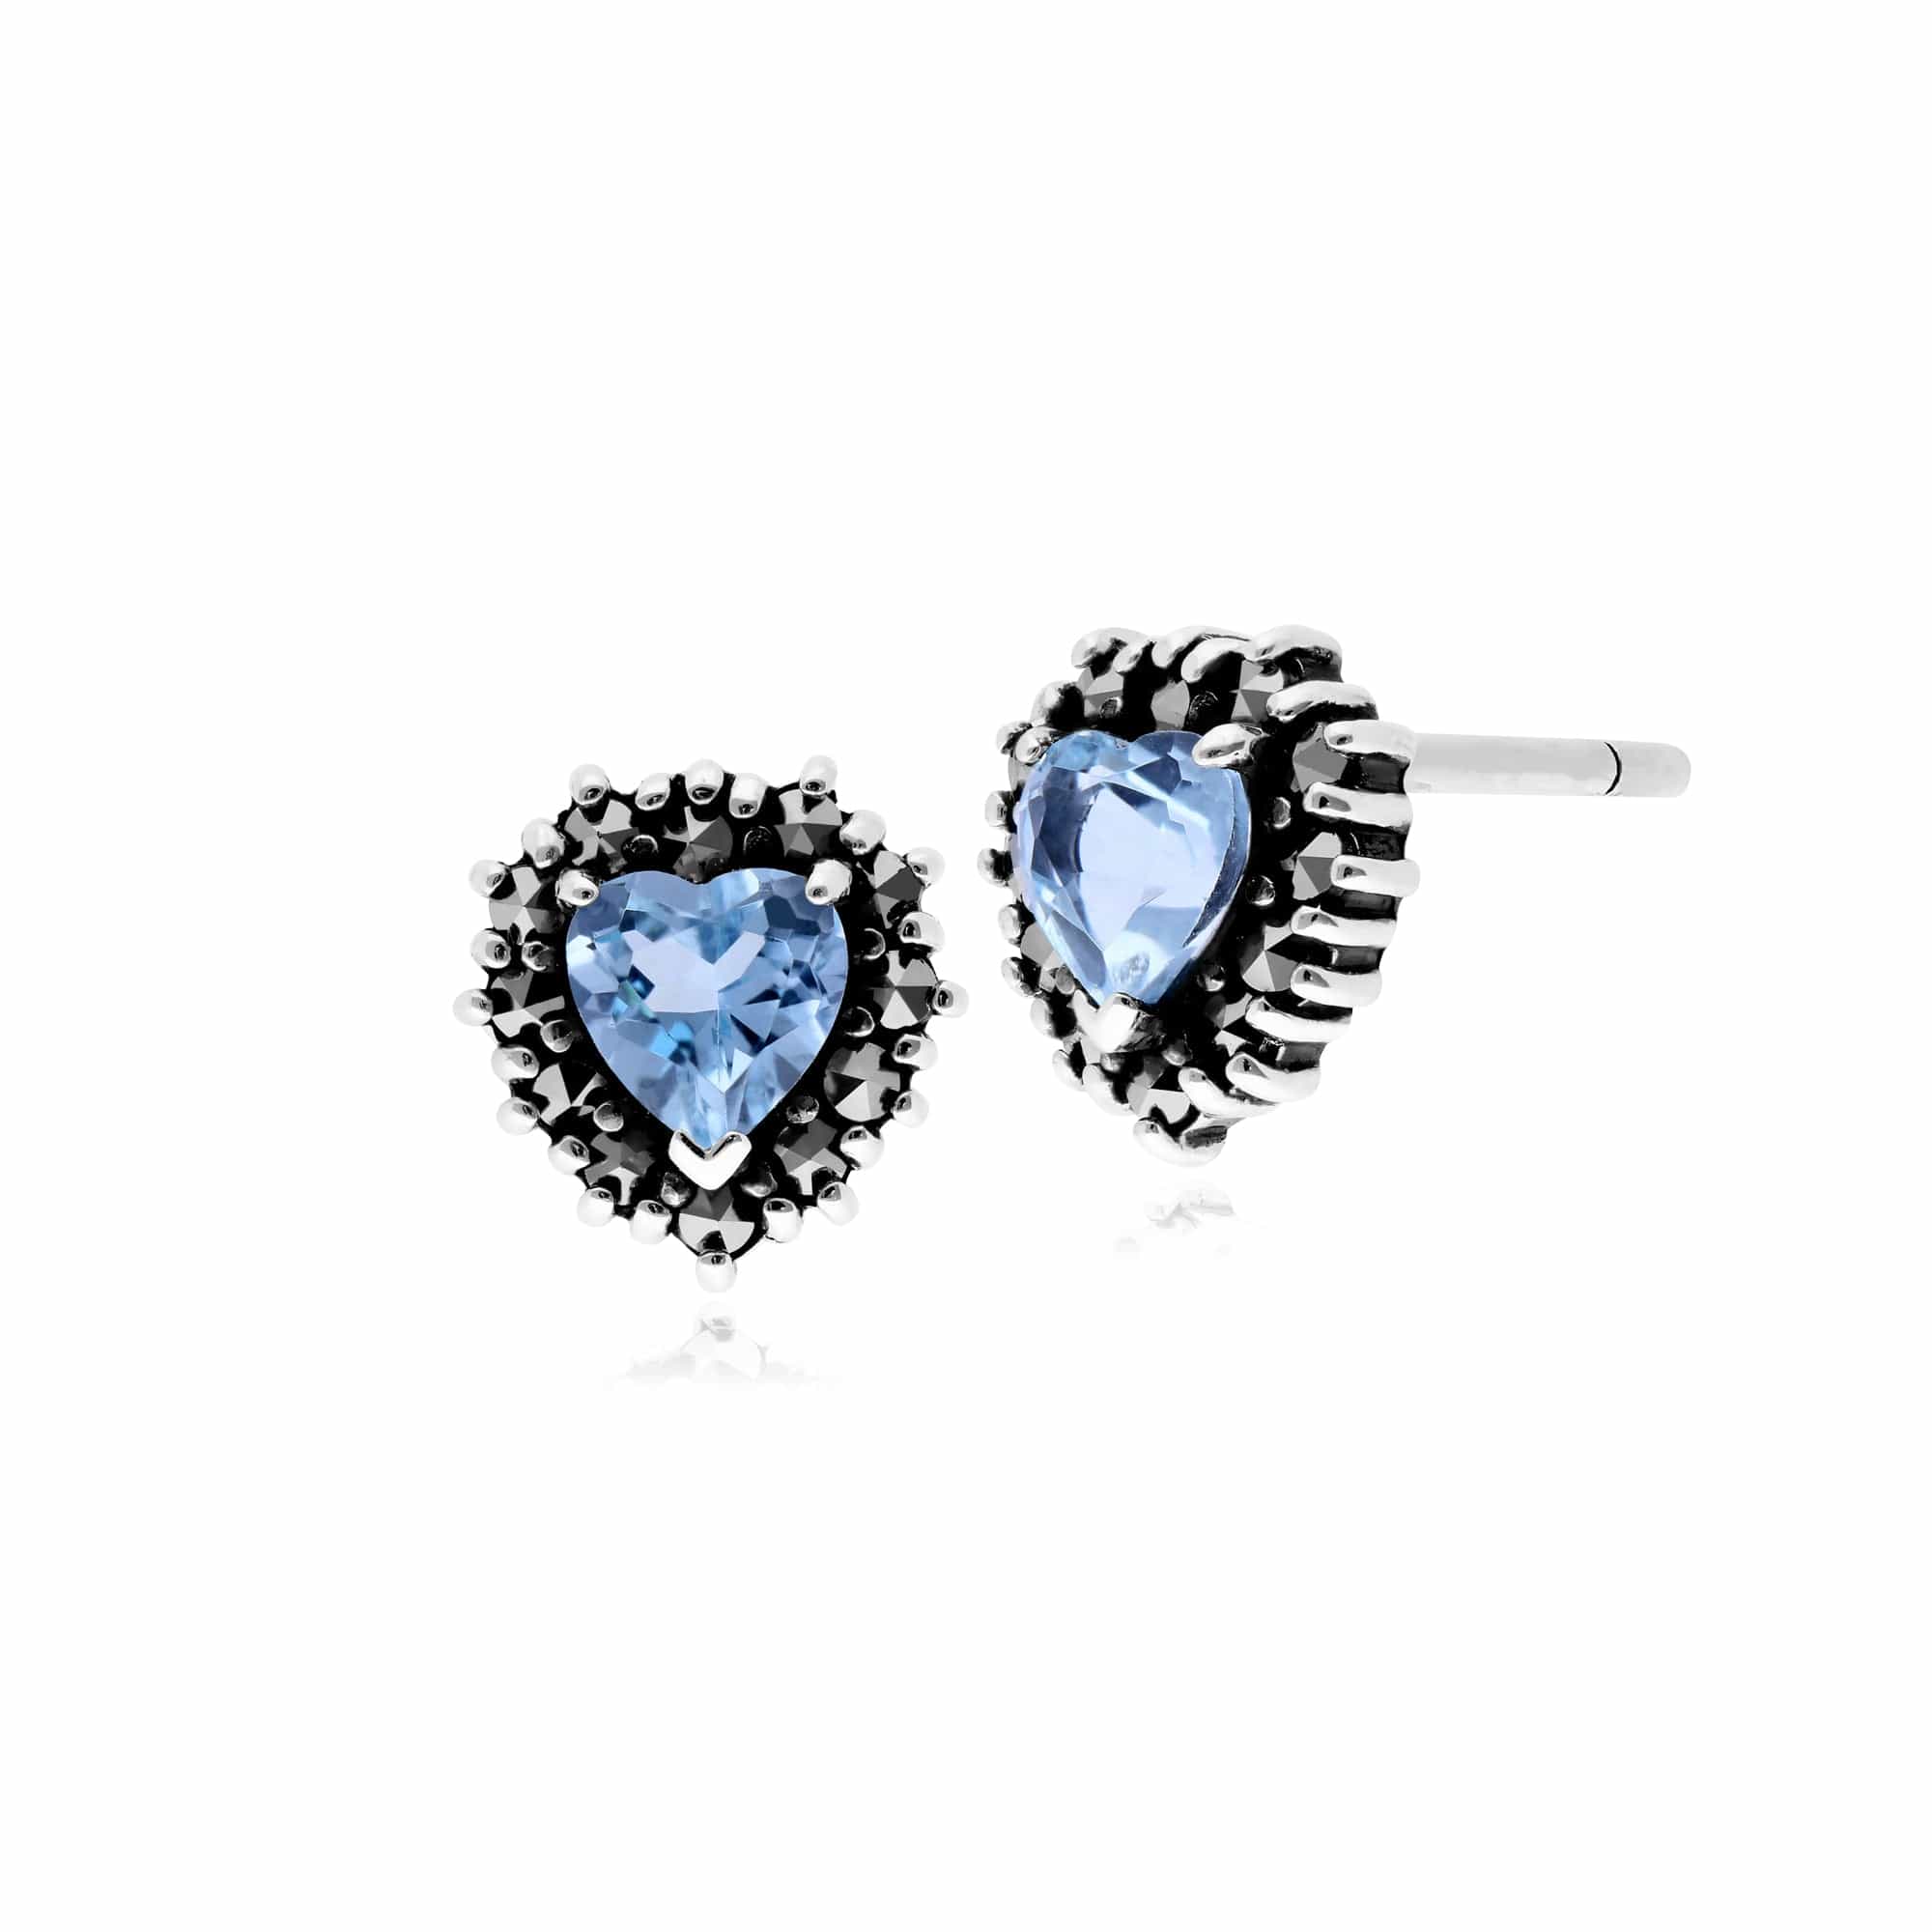 214E725705925-214P301203925 Art Deco Style Blue Topaz & Marcasite Heart Stud Earrings & Necklace Set in 925 Sterling Silver 2